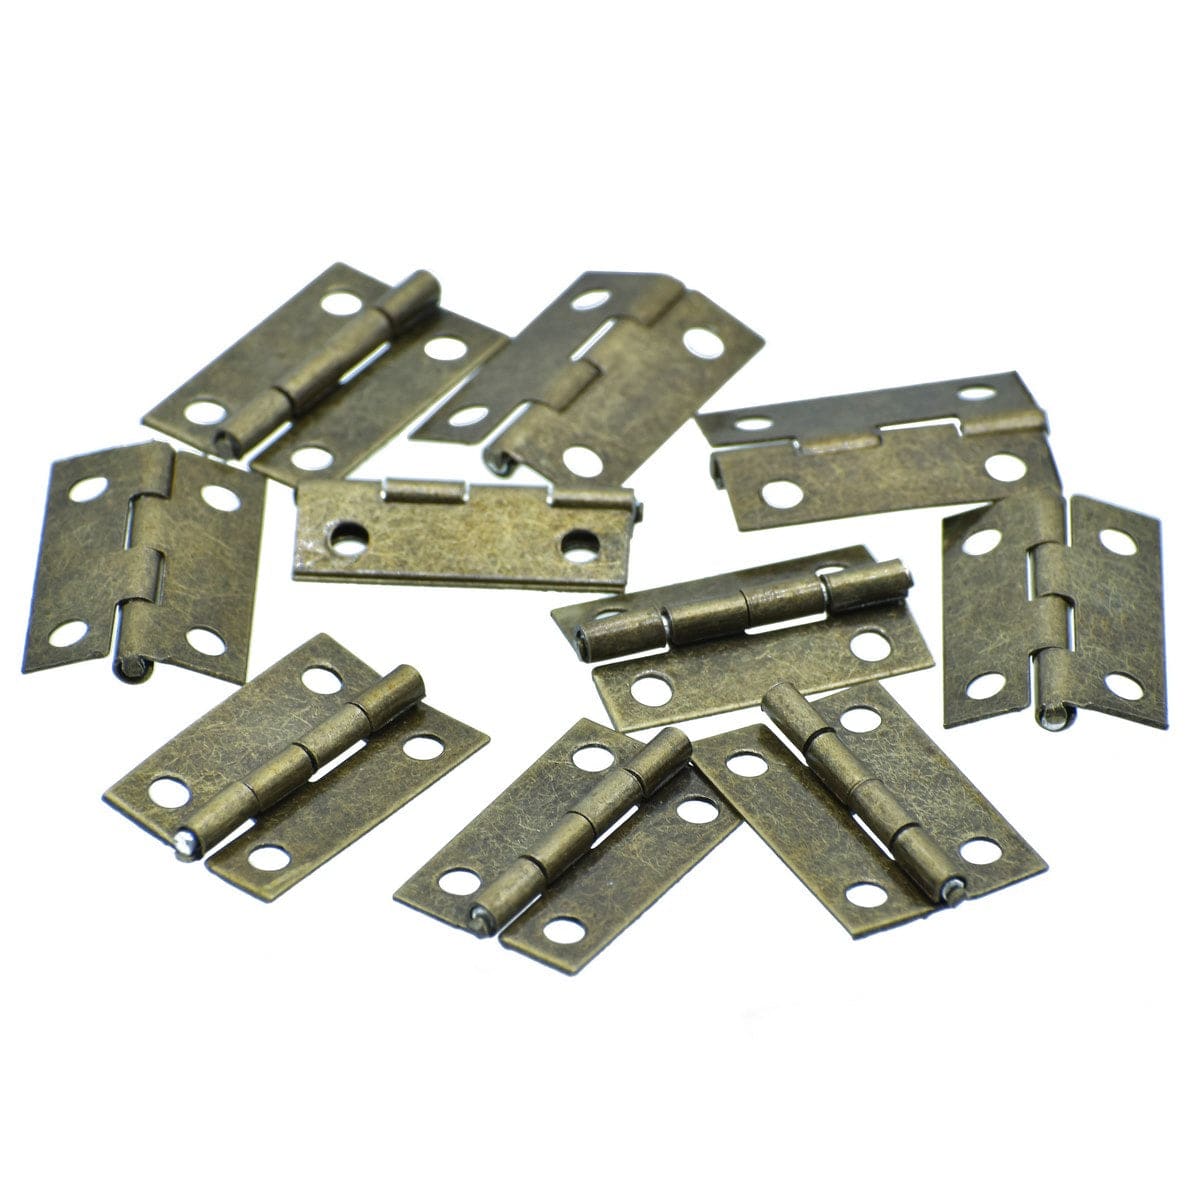 jags-mumbai Chains & Hooks Metal Fitting Hinges Small 10 Pcs 16X25MM G074